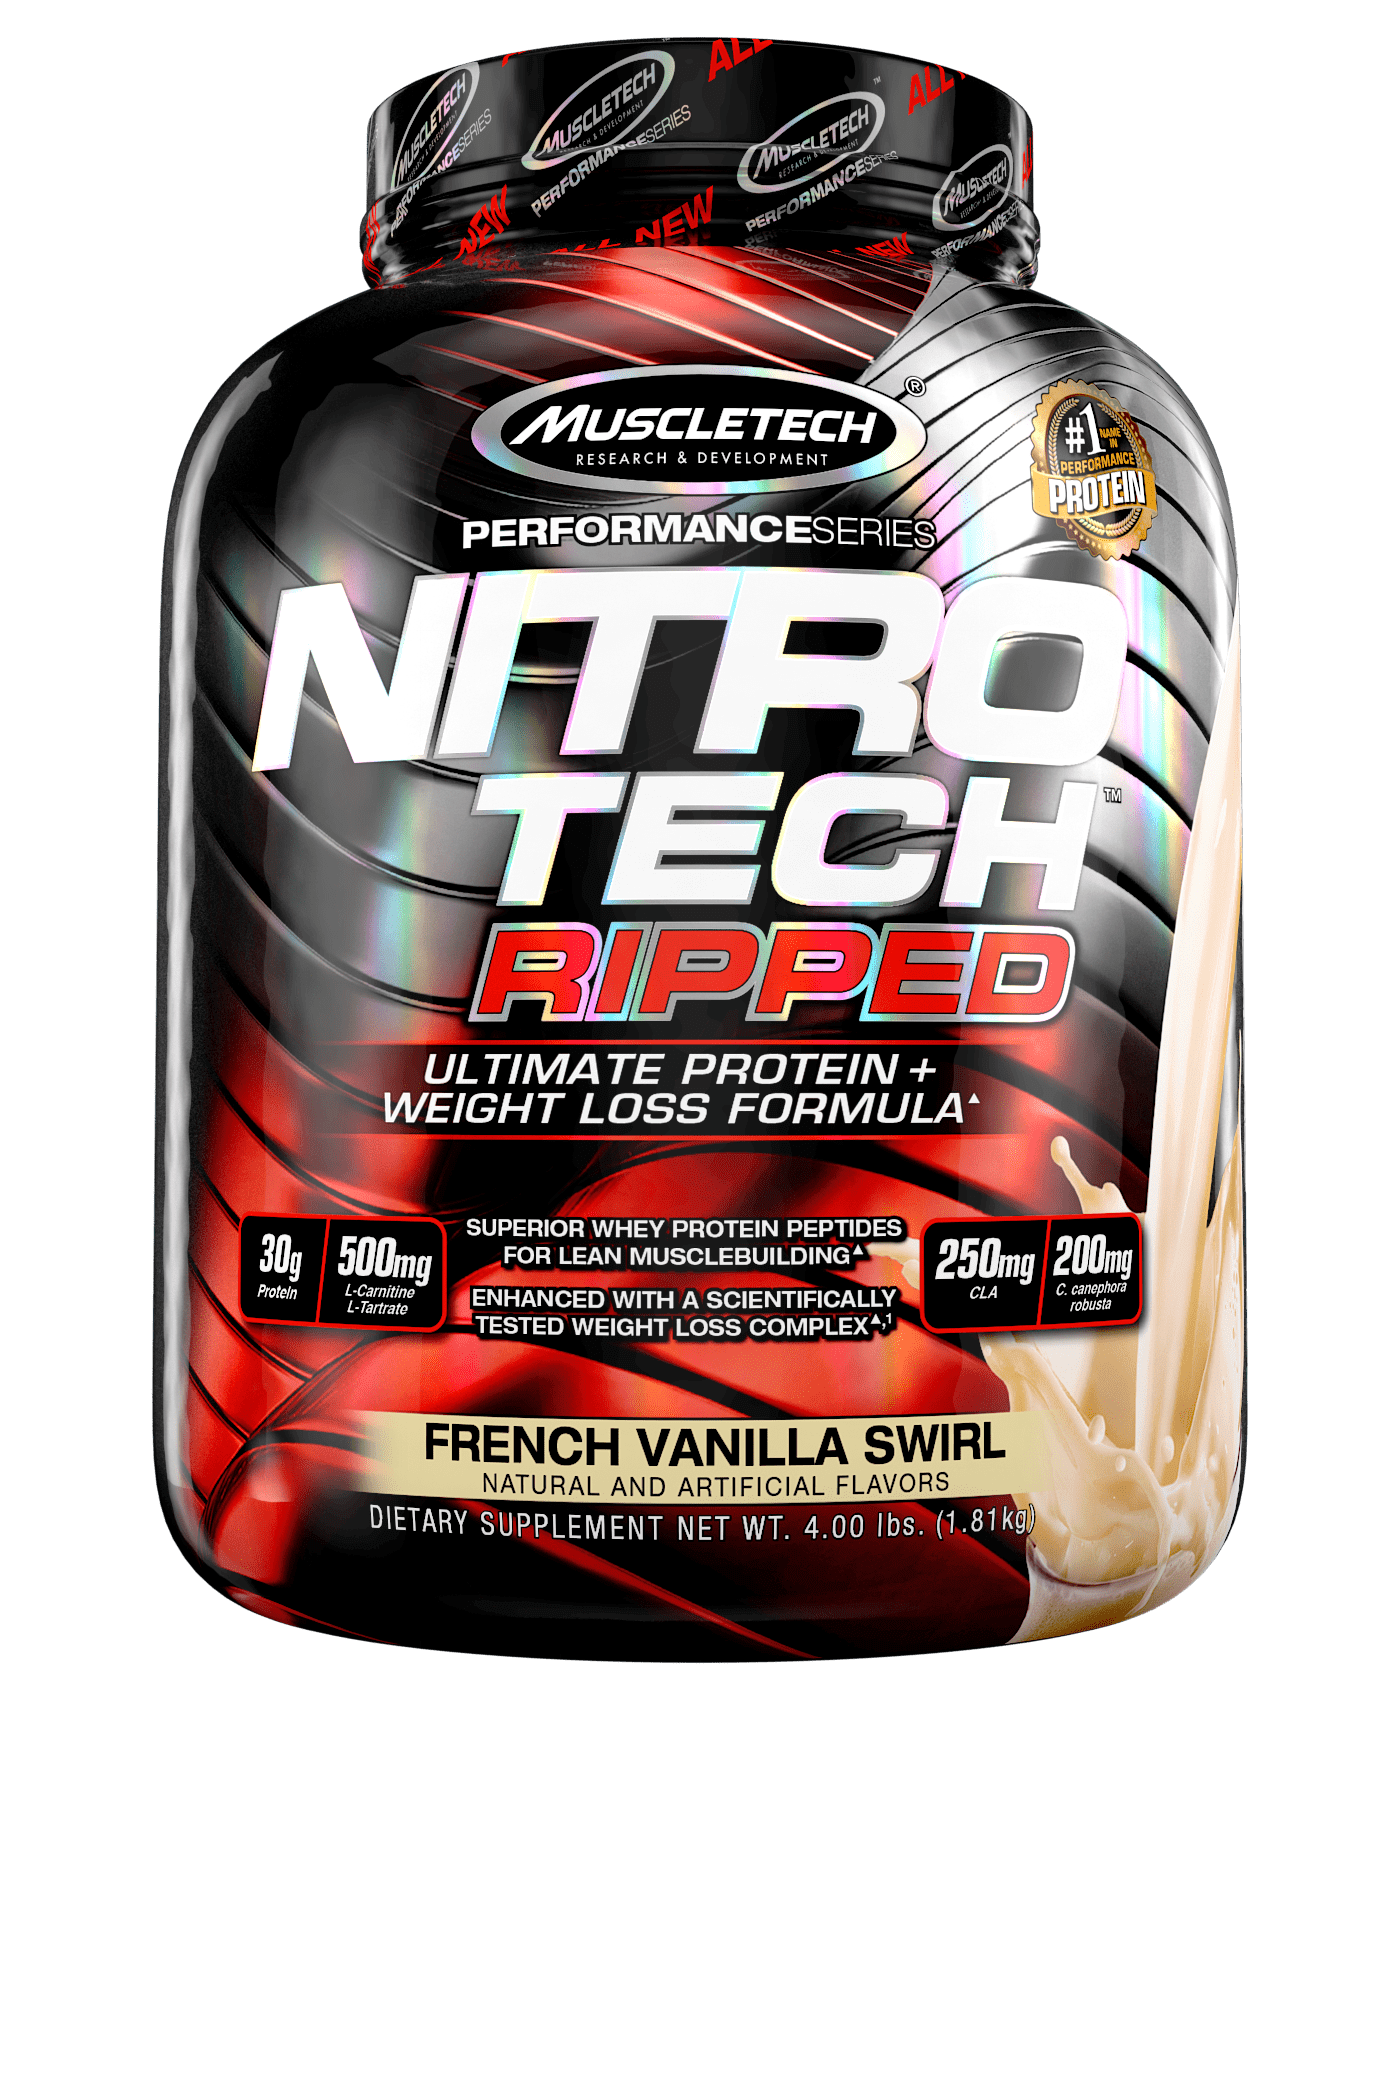 Nitro Tech Ripped Ultra Clean Whey Protein Isolate Powder Weight Loss Formula Low Sugar Low Carb French Vanilla 40 Servings 4lbs Walmart Com Walmart Com,Banana Hammock Borat